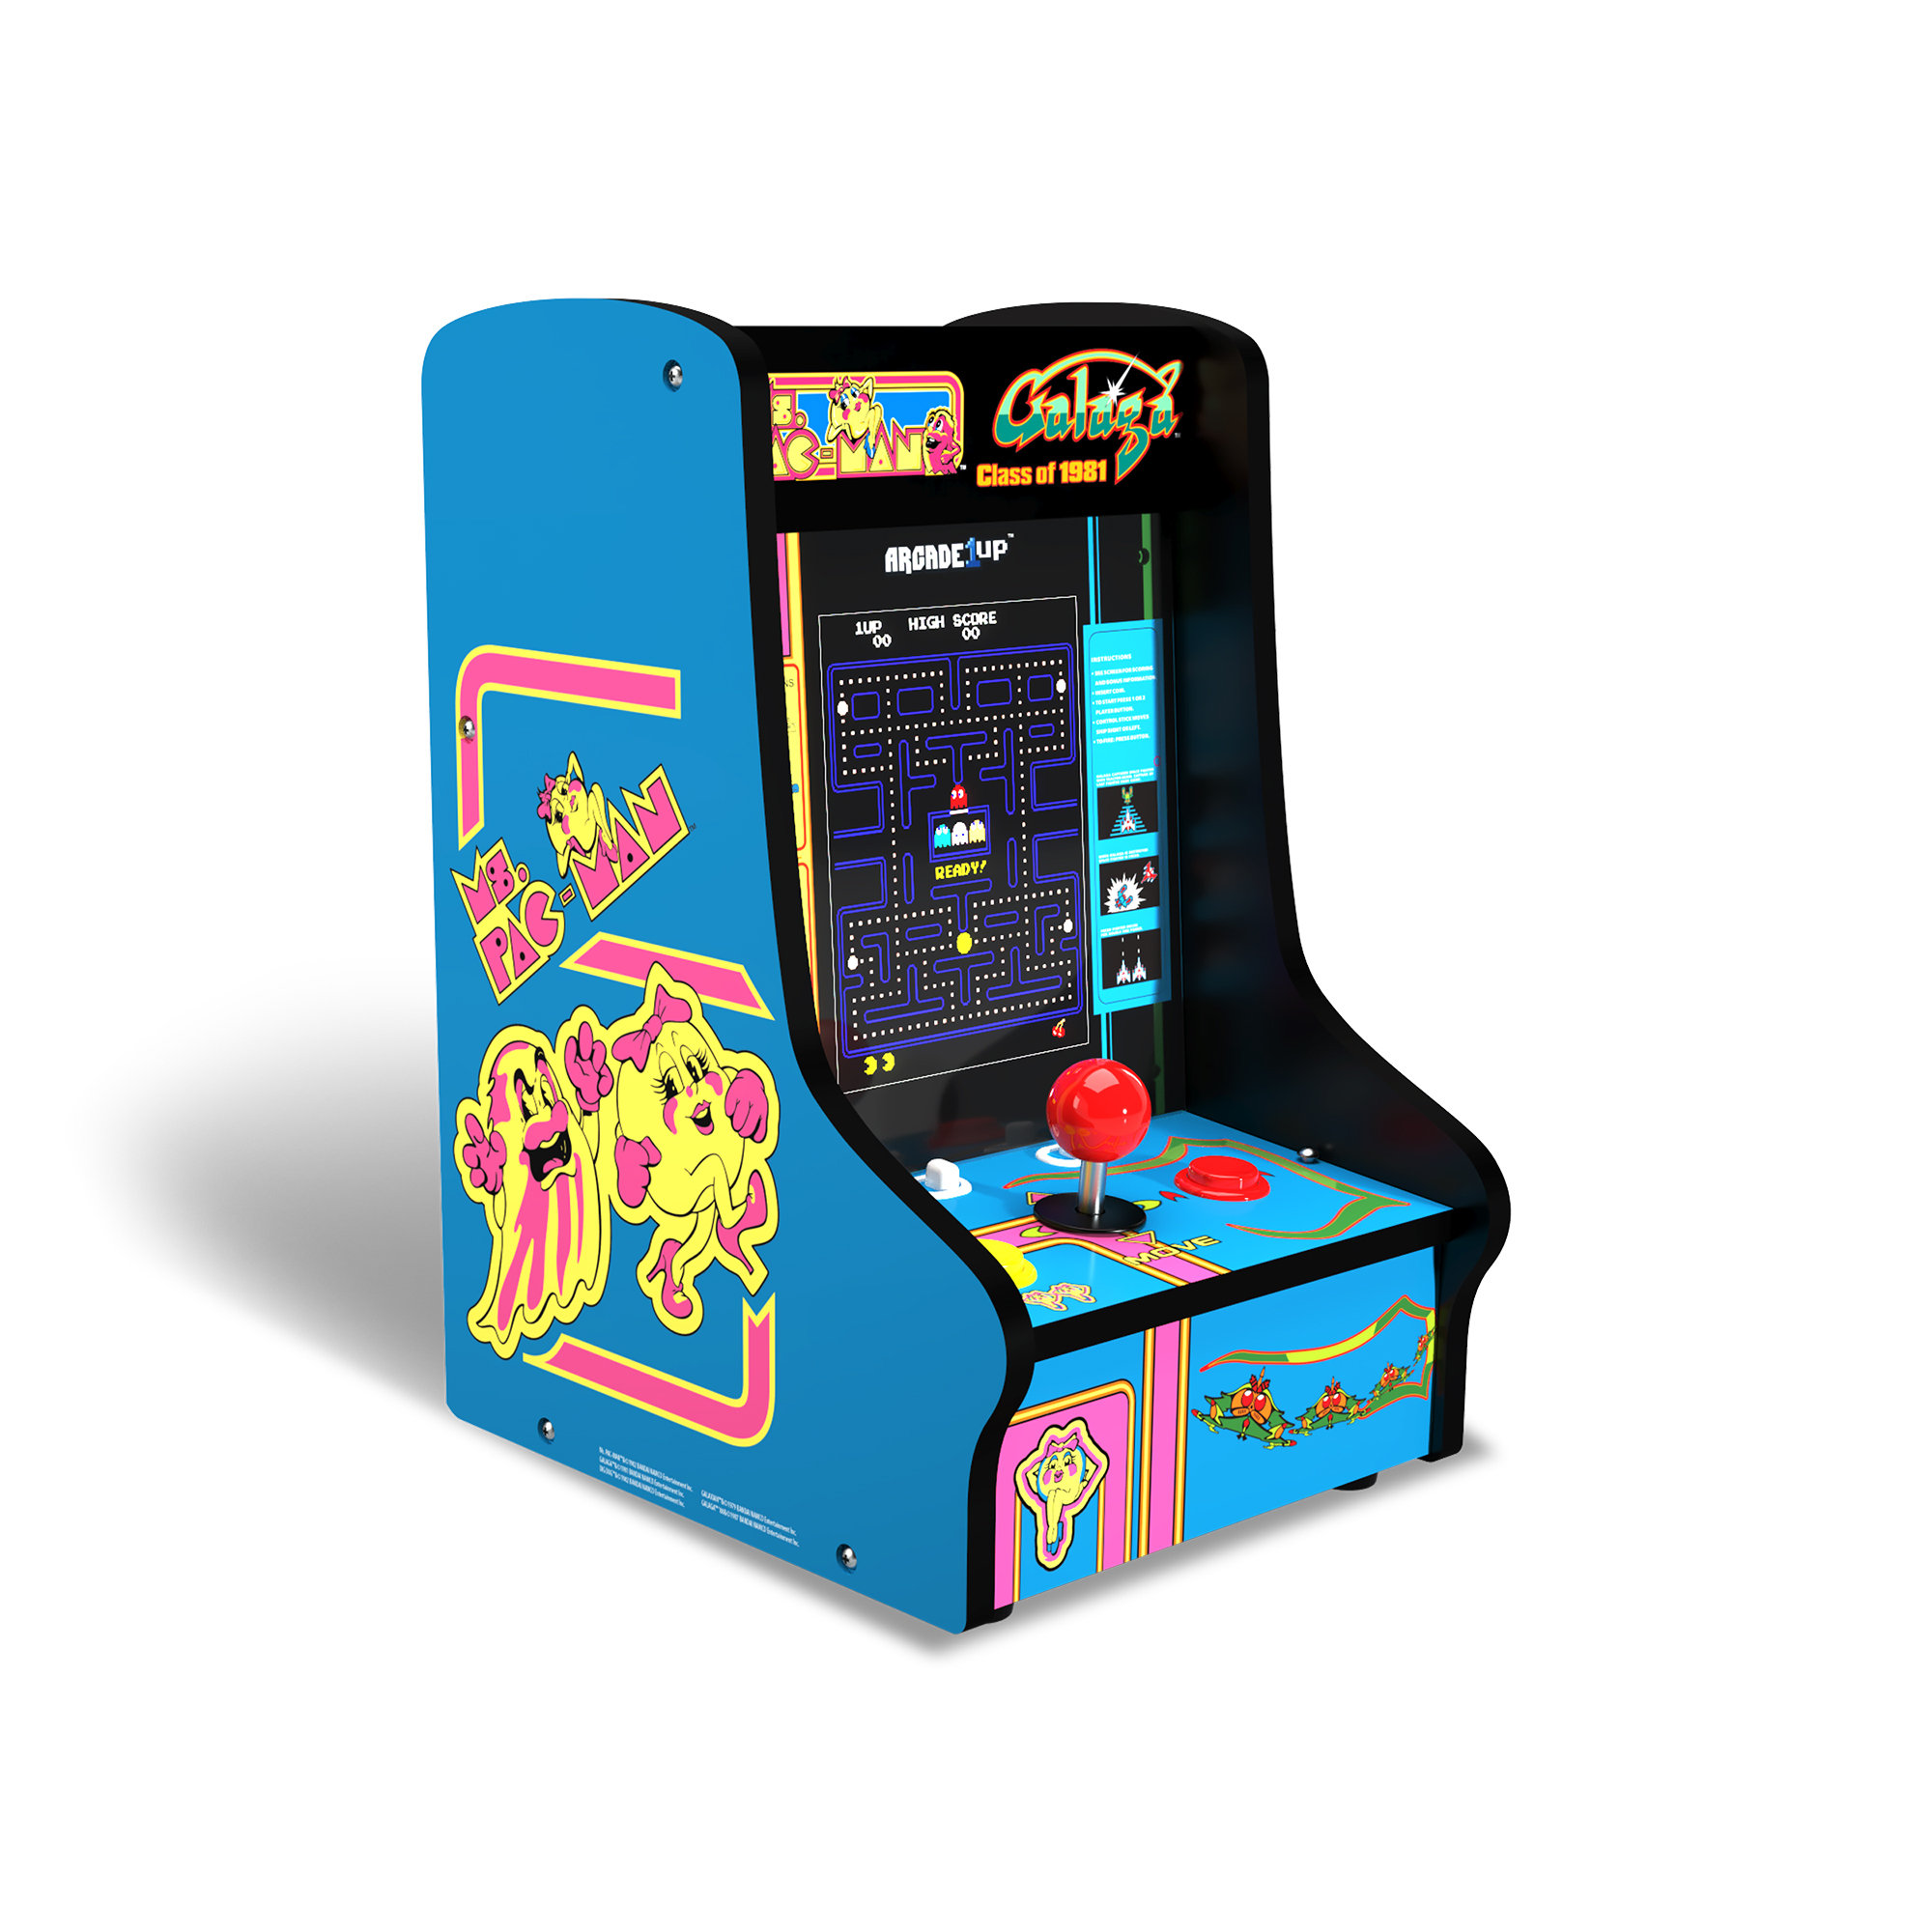 Arcade Up Arcade Up Ms Pacman Galaga Tabletop Arcade Machine Reviews Wayfair